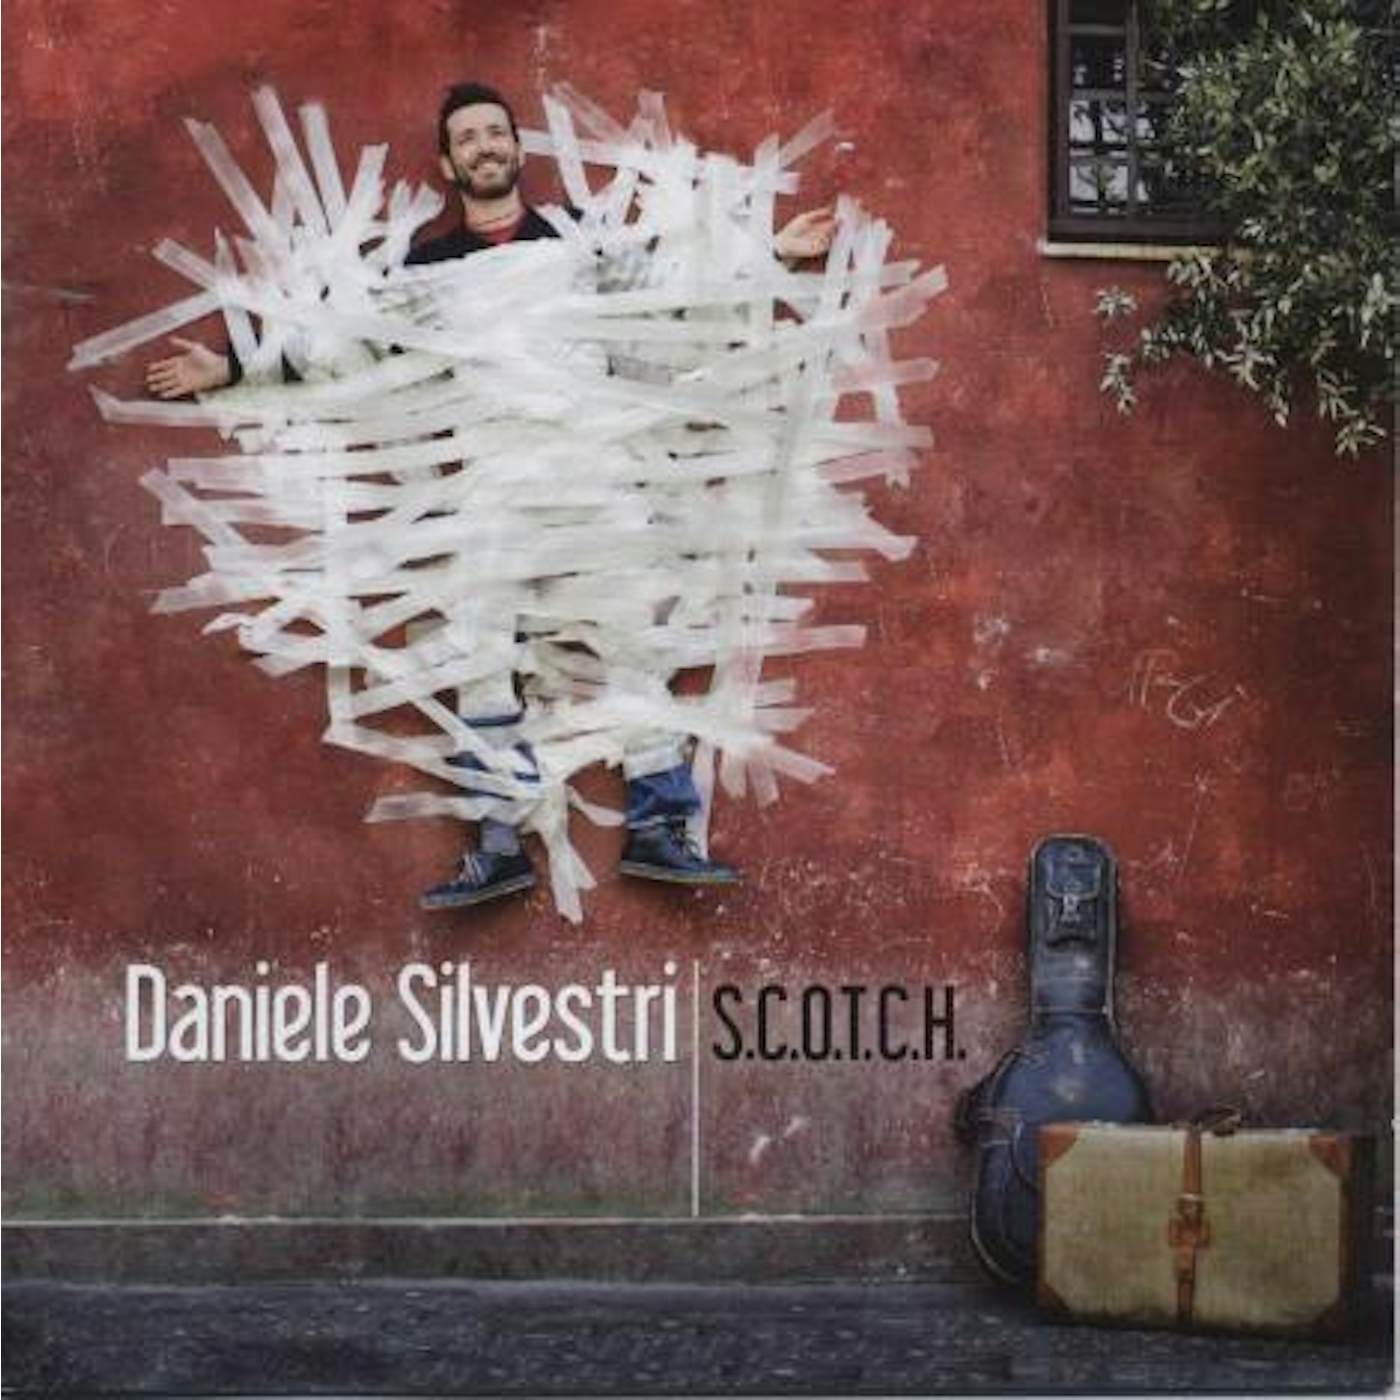 Daniele Silvestri S.C.O.T.C.H. Vinyl Record